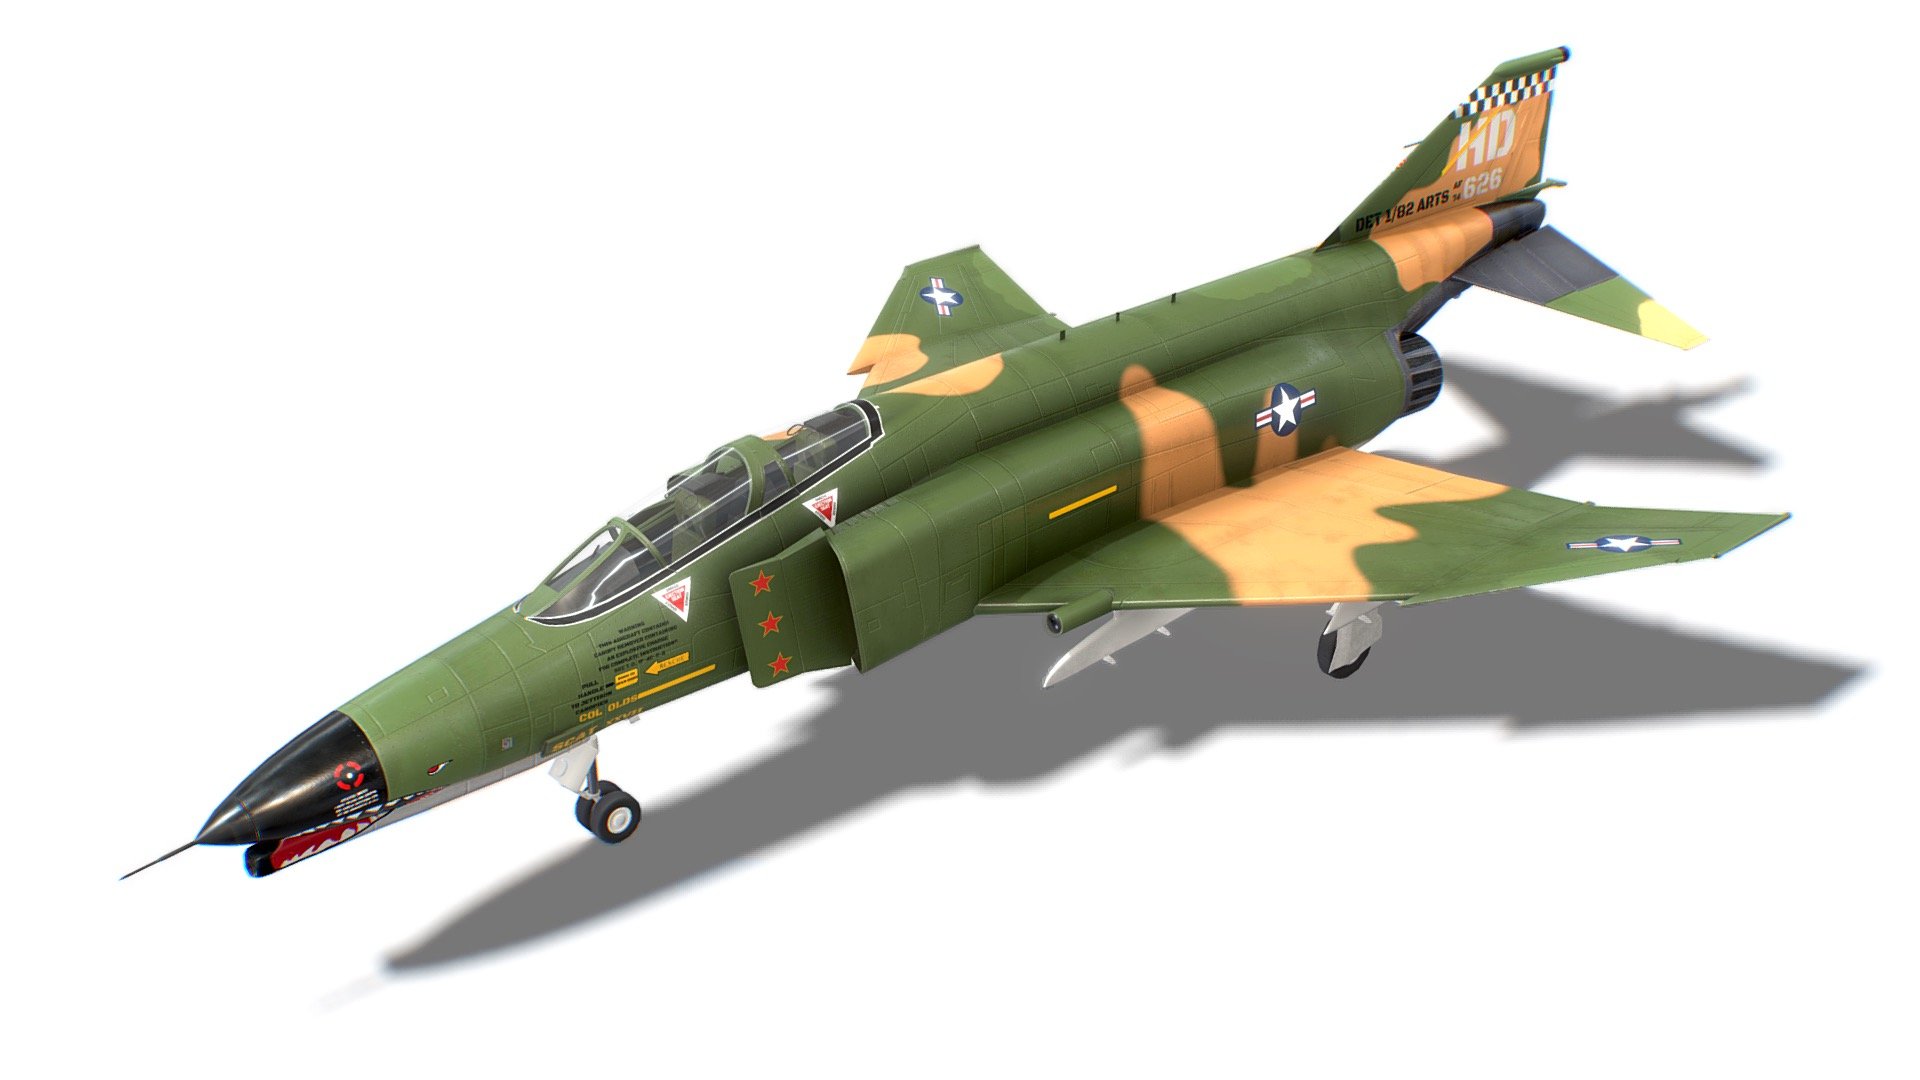 F-4 Phantom II Jet Fighter Aircraft